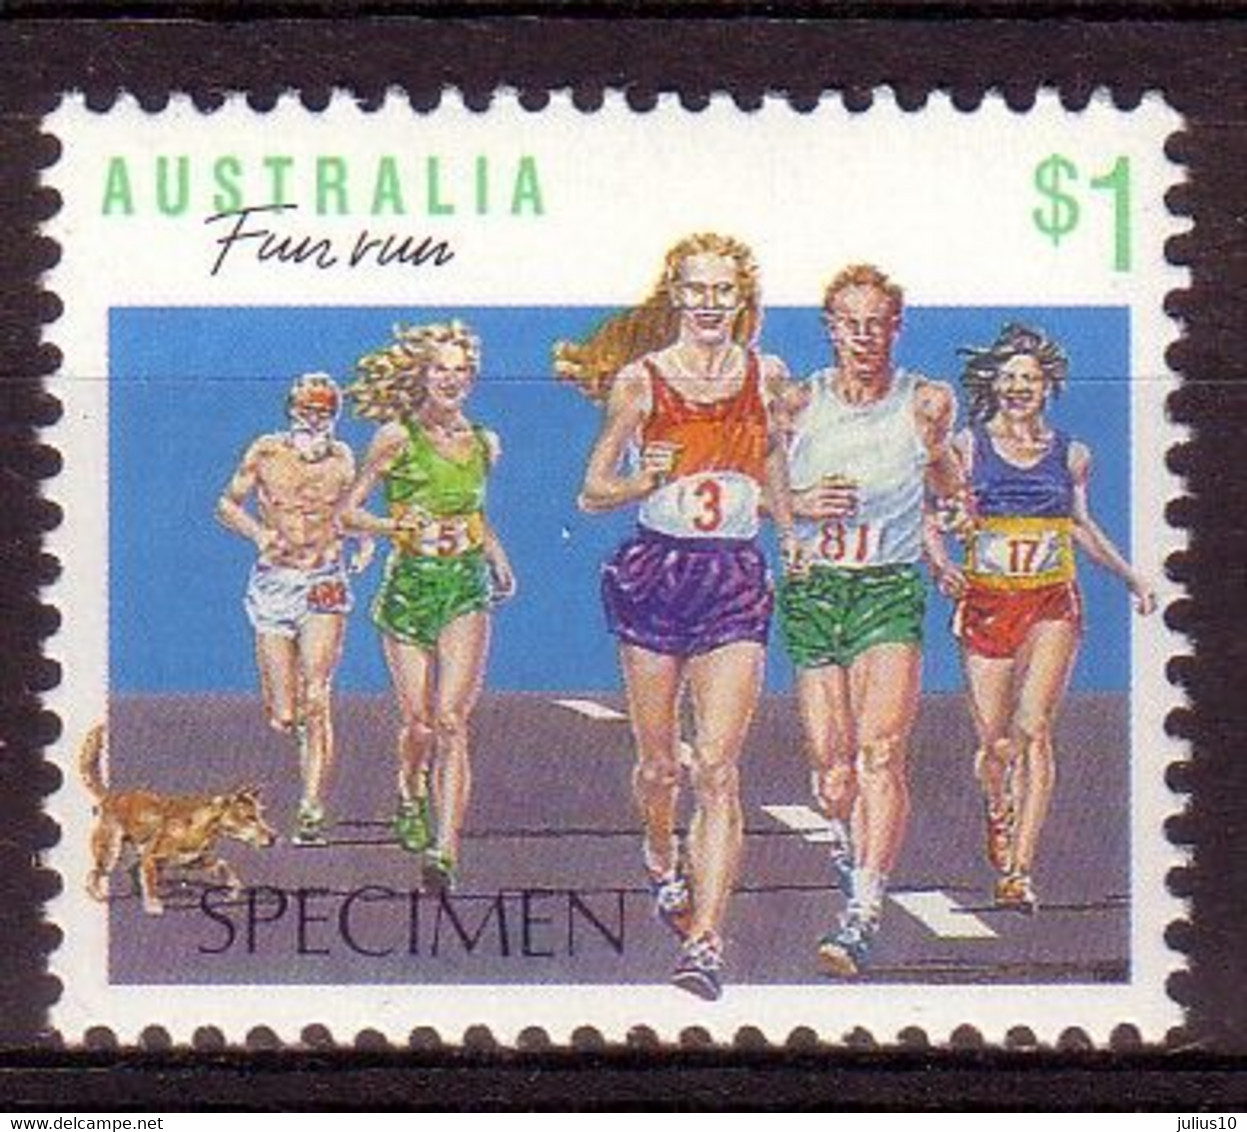 AUSTRALIA 1990 Sport Run „SPECIMEN“ High Value MNH Mi 1186 #10002 - Plaatfouten En Curiosa